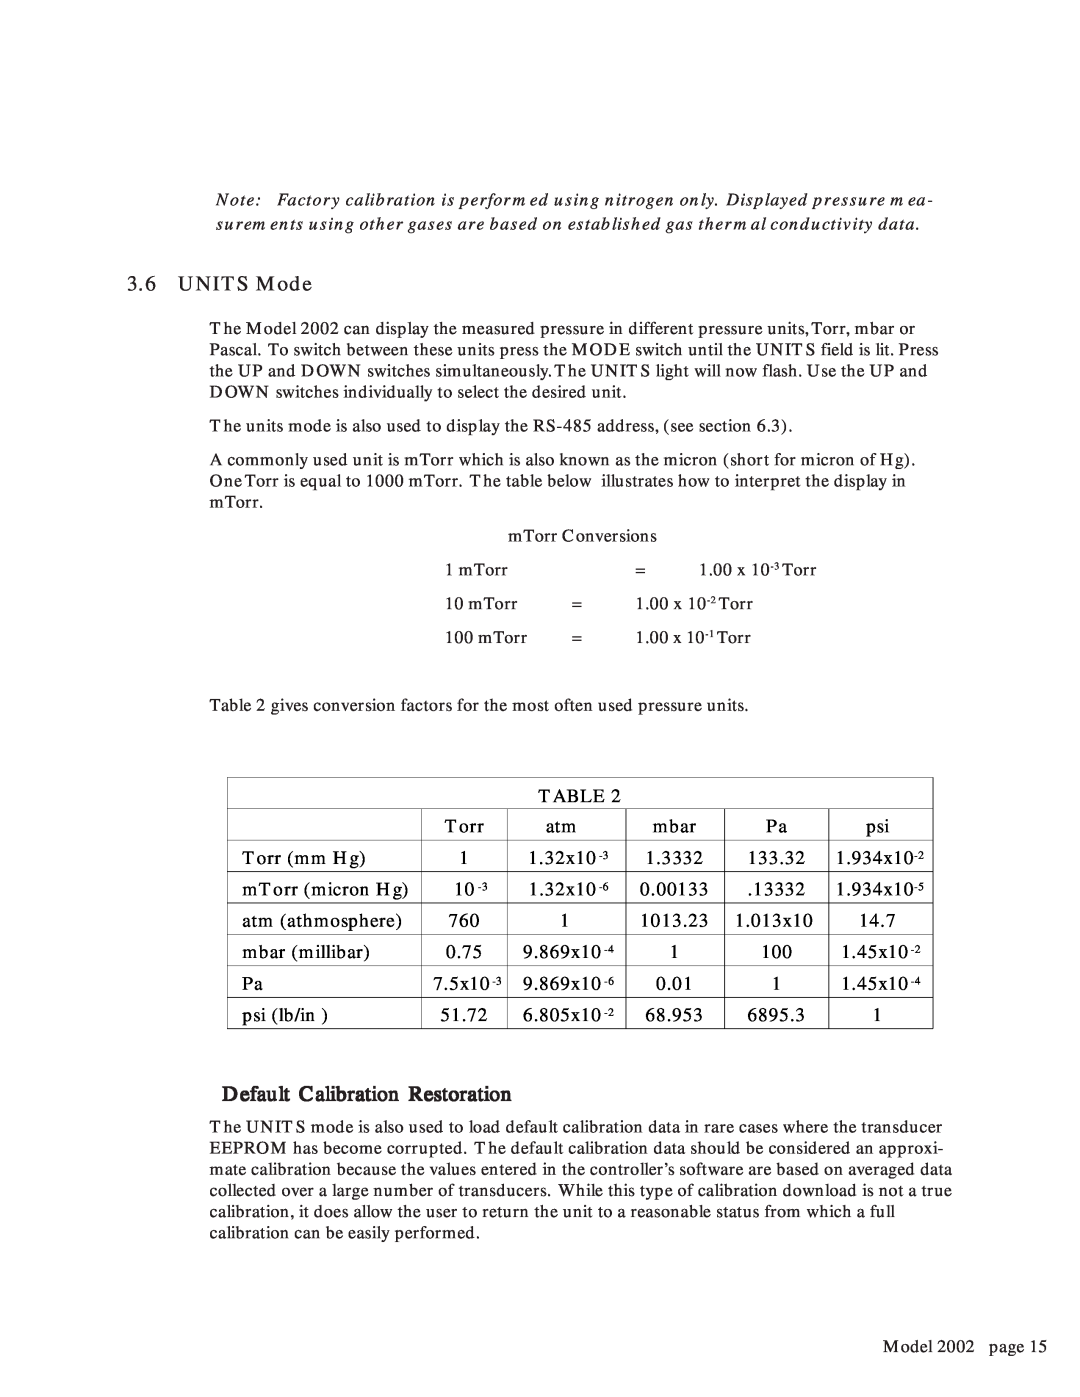 Teledyne 2002 instruction manual UNITS Mode, Default Calibration Restoration 